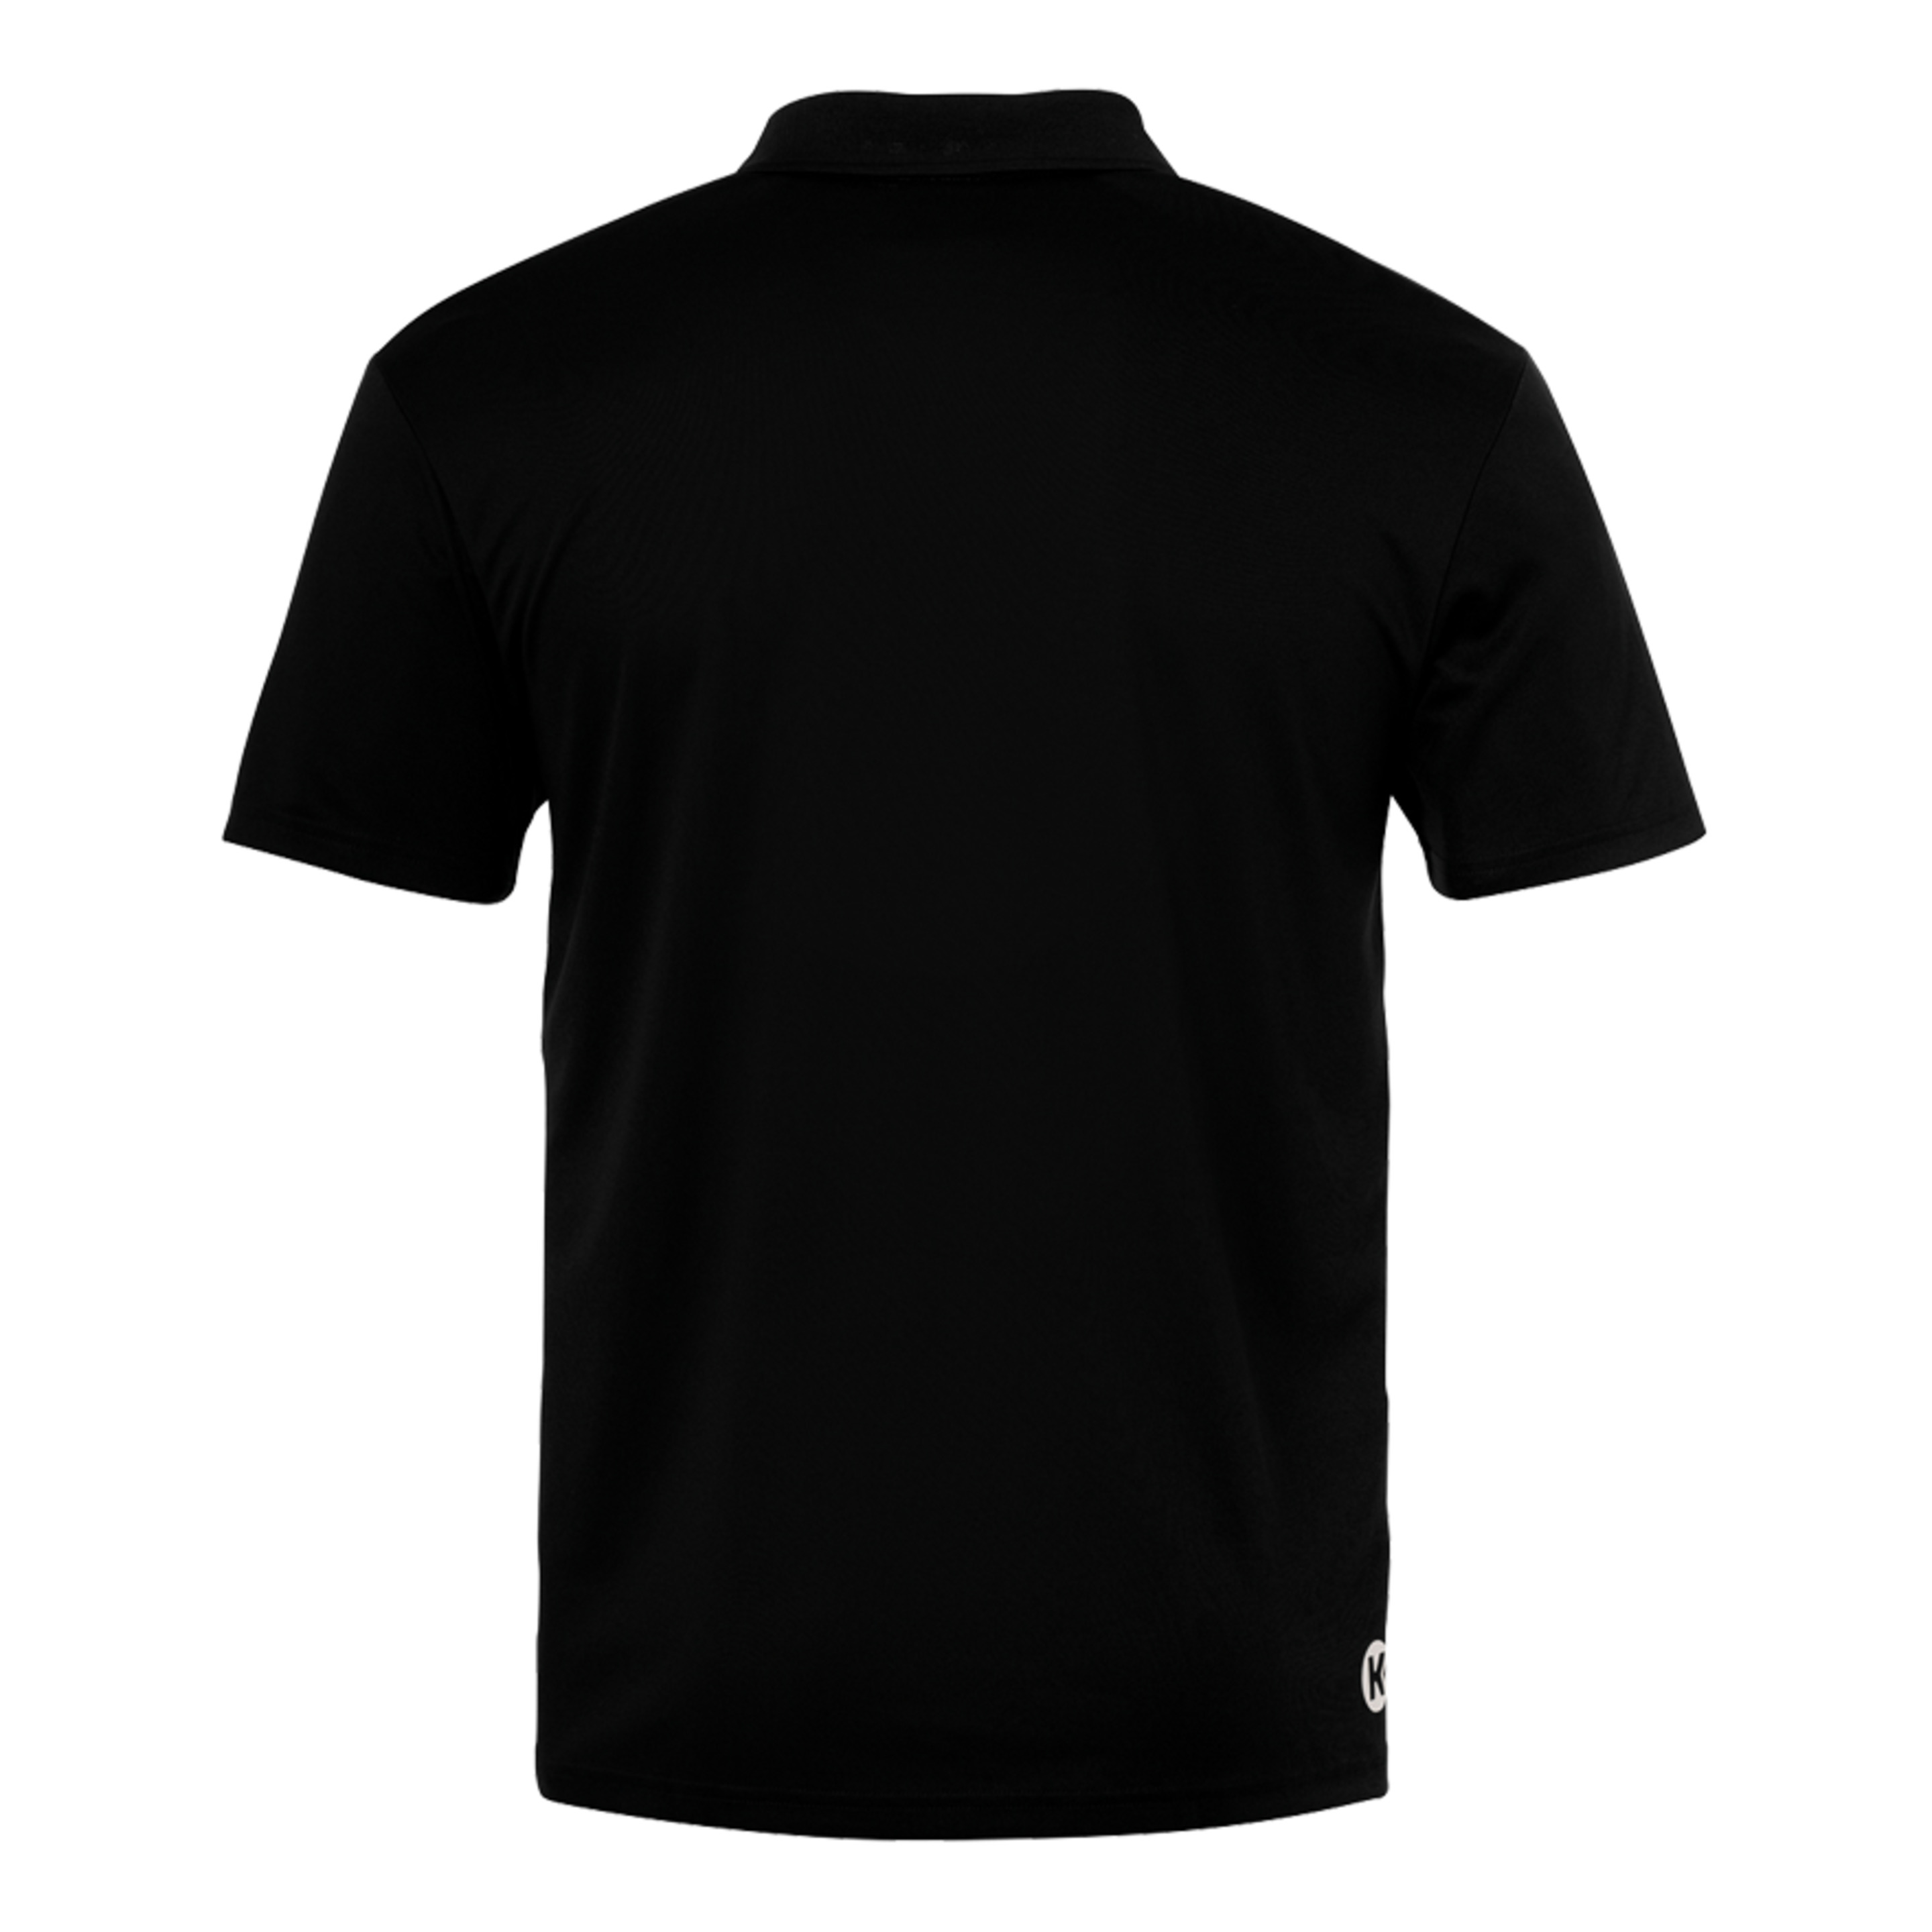 Poly Polo Shirt Negro Kempa